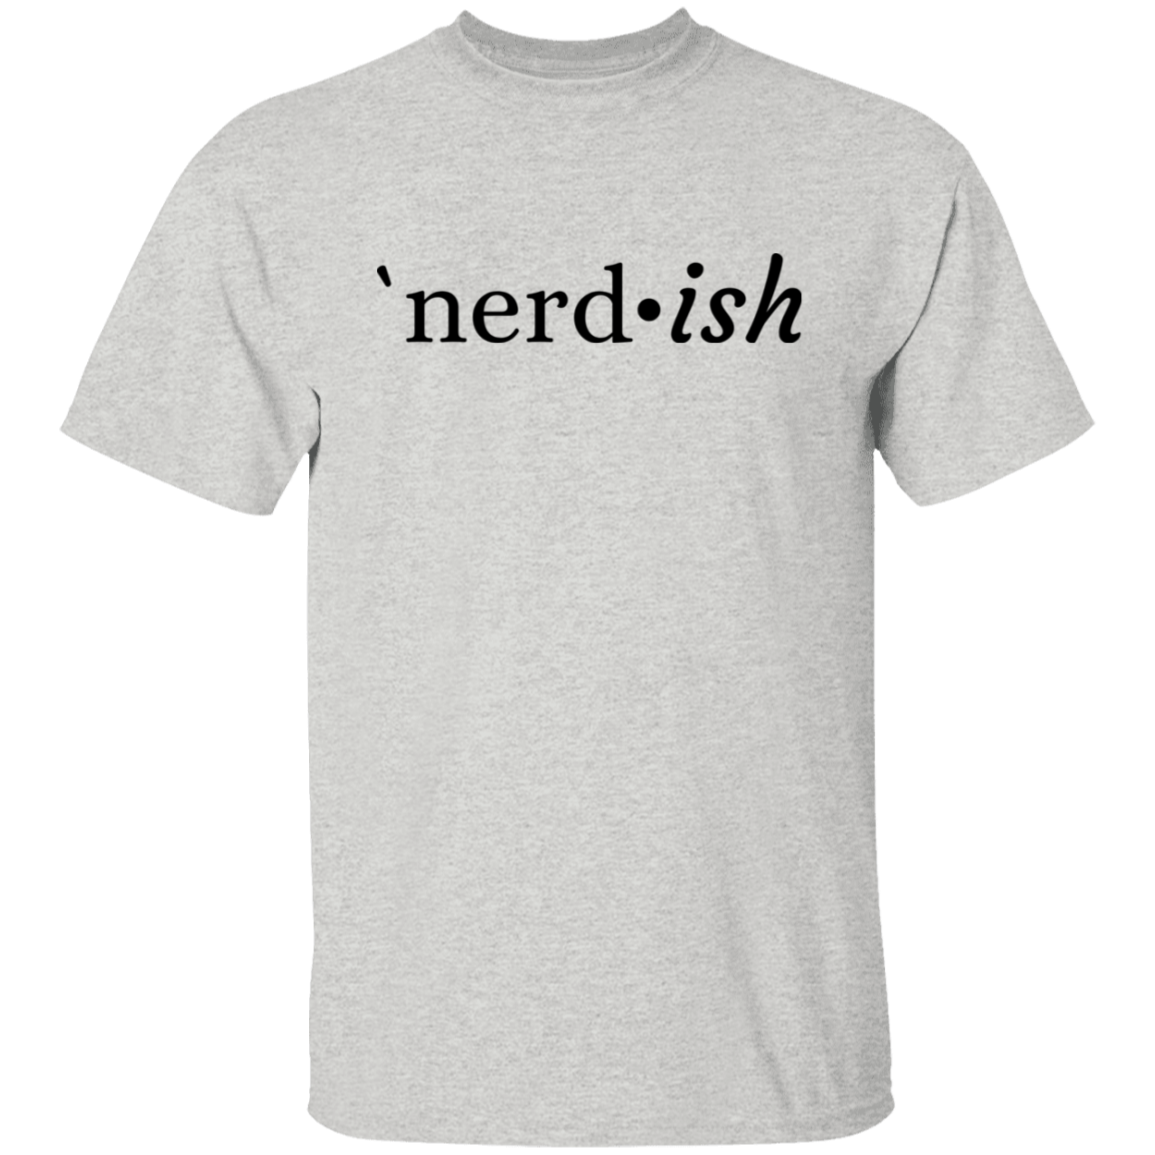 nerd*ish T-Shirt (Short and Long Sleeve)